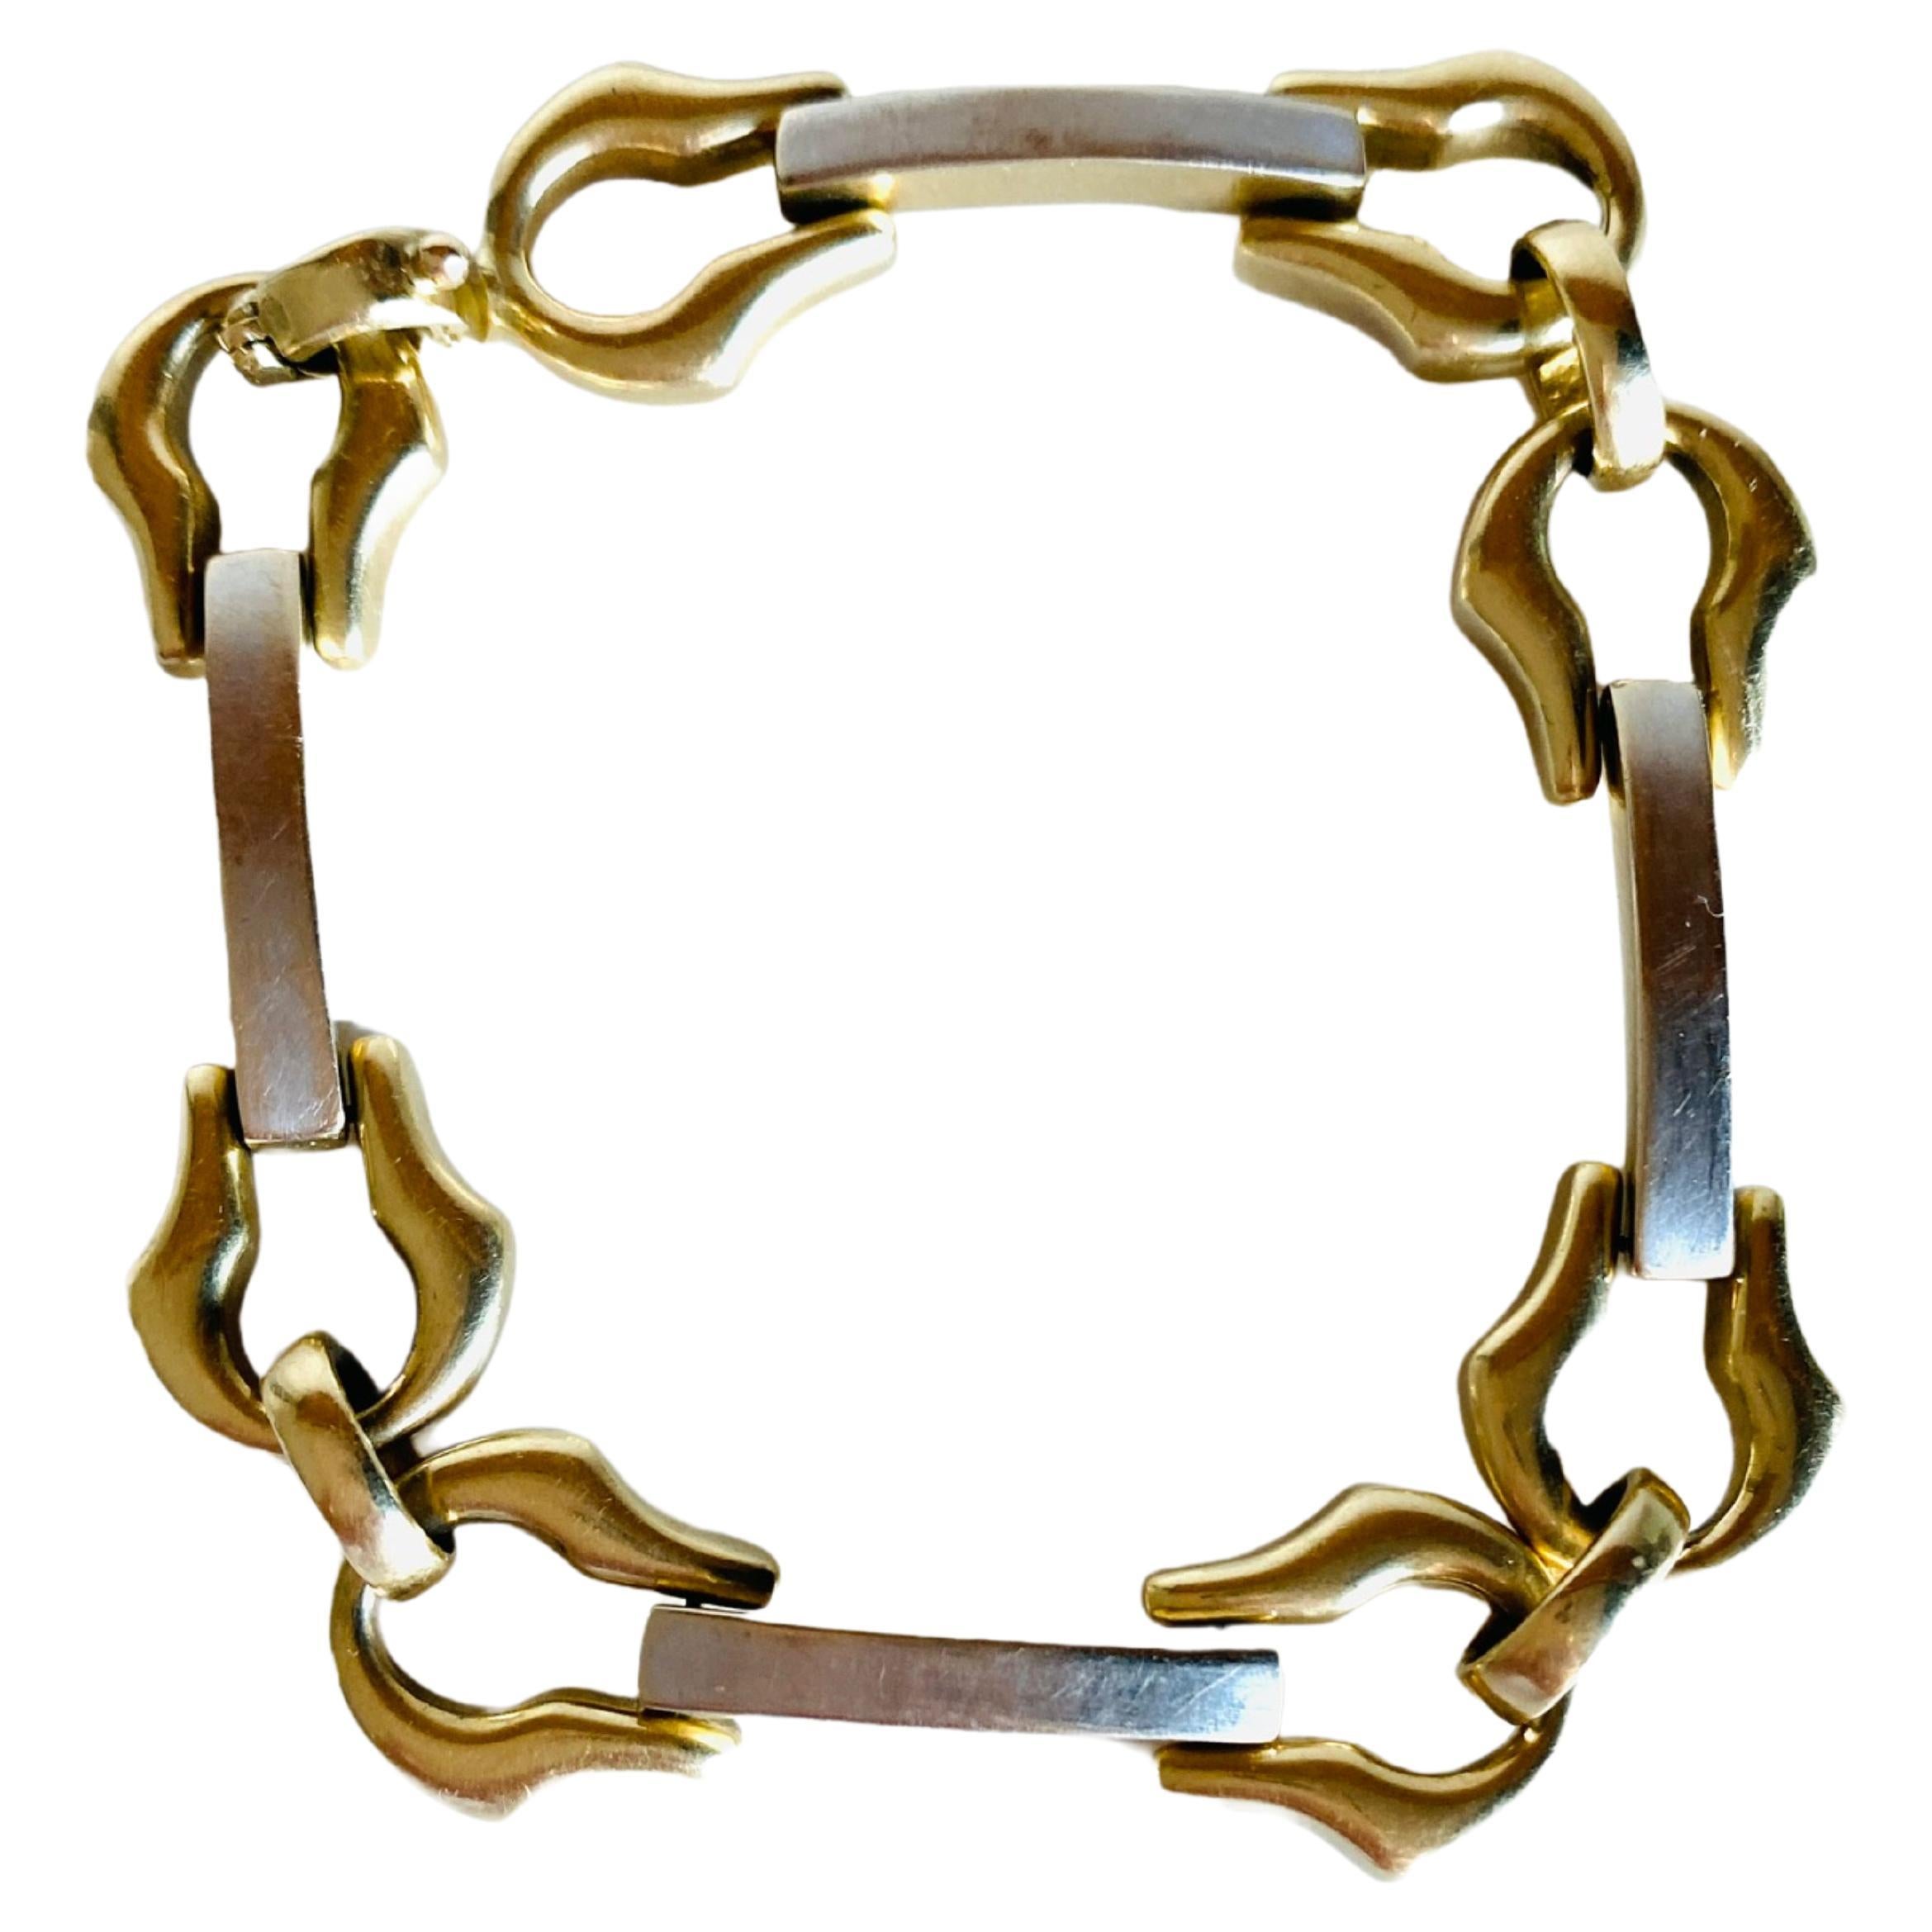 1940s 14k Italian Yellow & White Gold Retro Bracelet Horse Bit Cable Chain Link